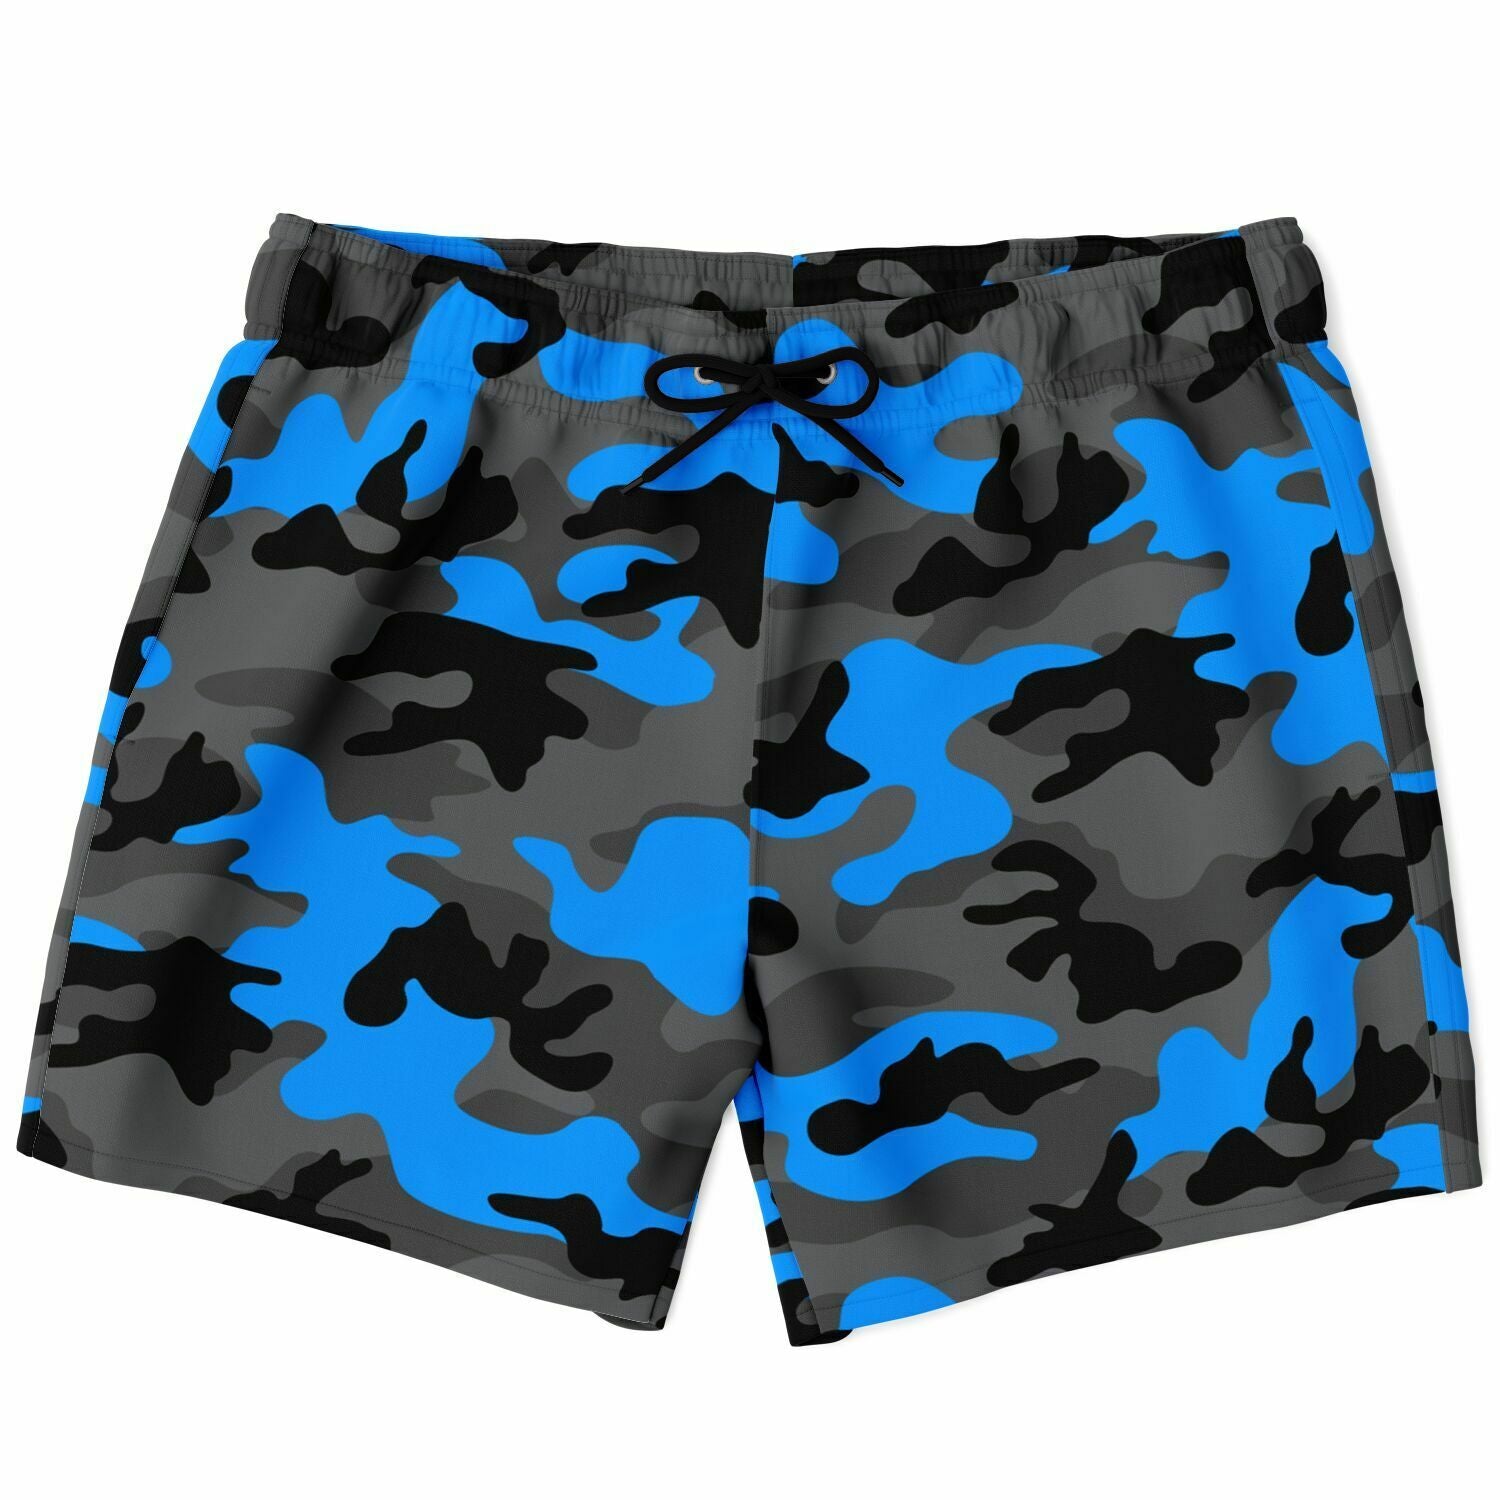 Men's Black Blue Camouflage Swimsuit Shorts Swim Trunks